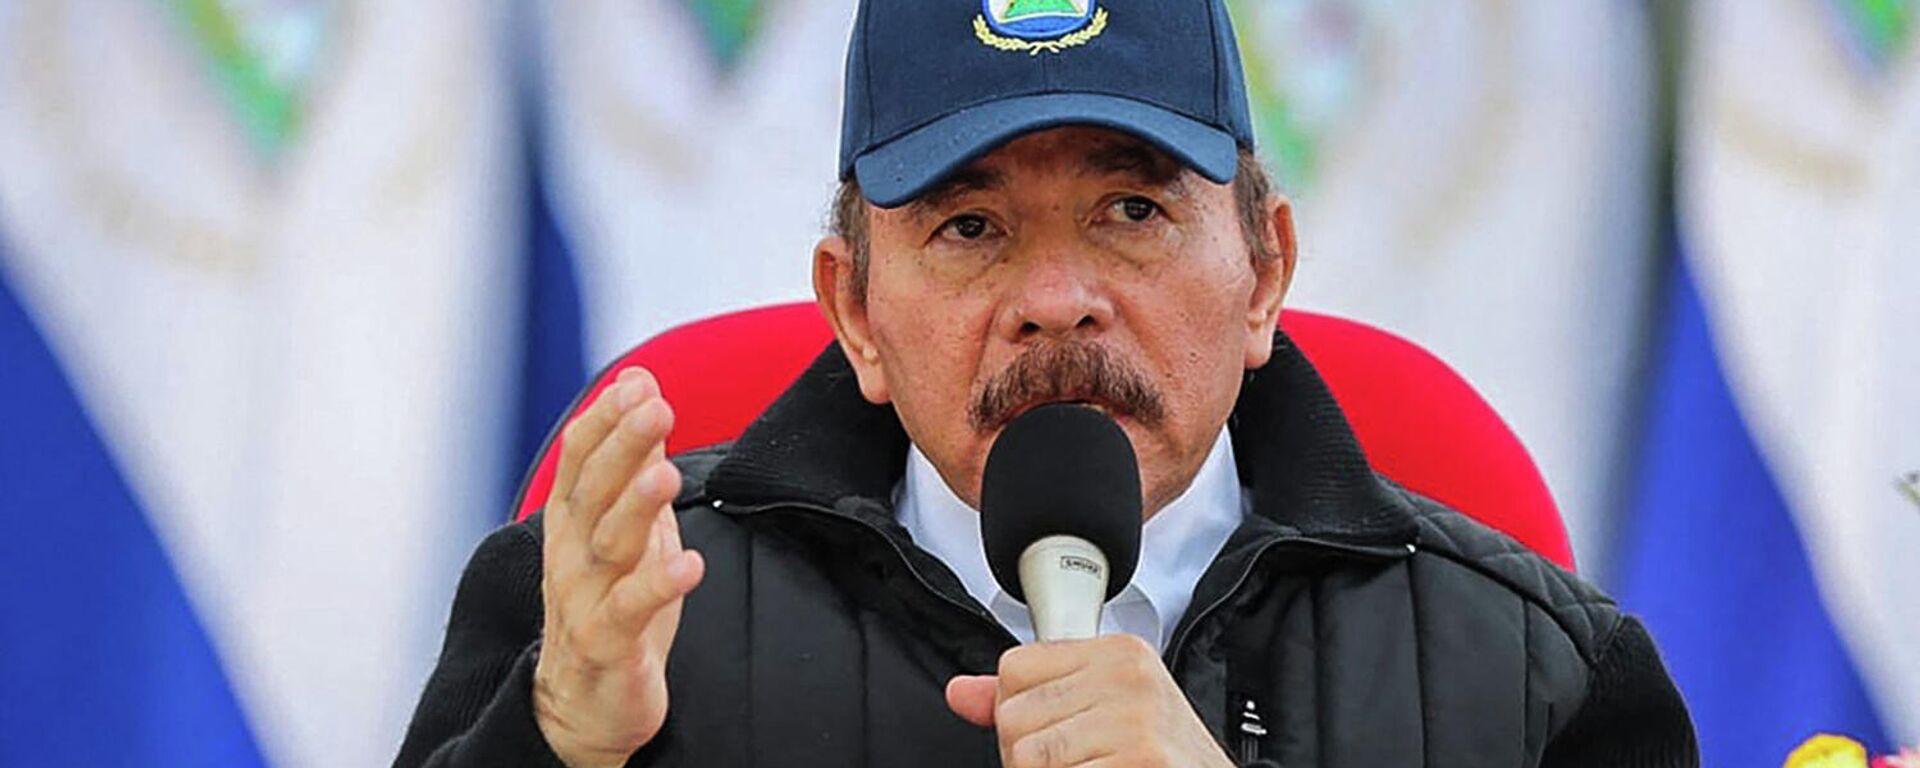 Daniel Ortega, presidente de Nicaragua - Sputnik Mundo, 1920, 19.05.2021